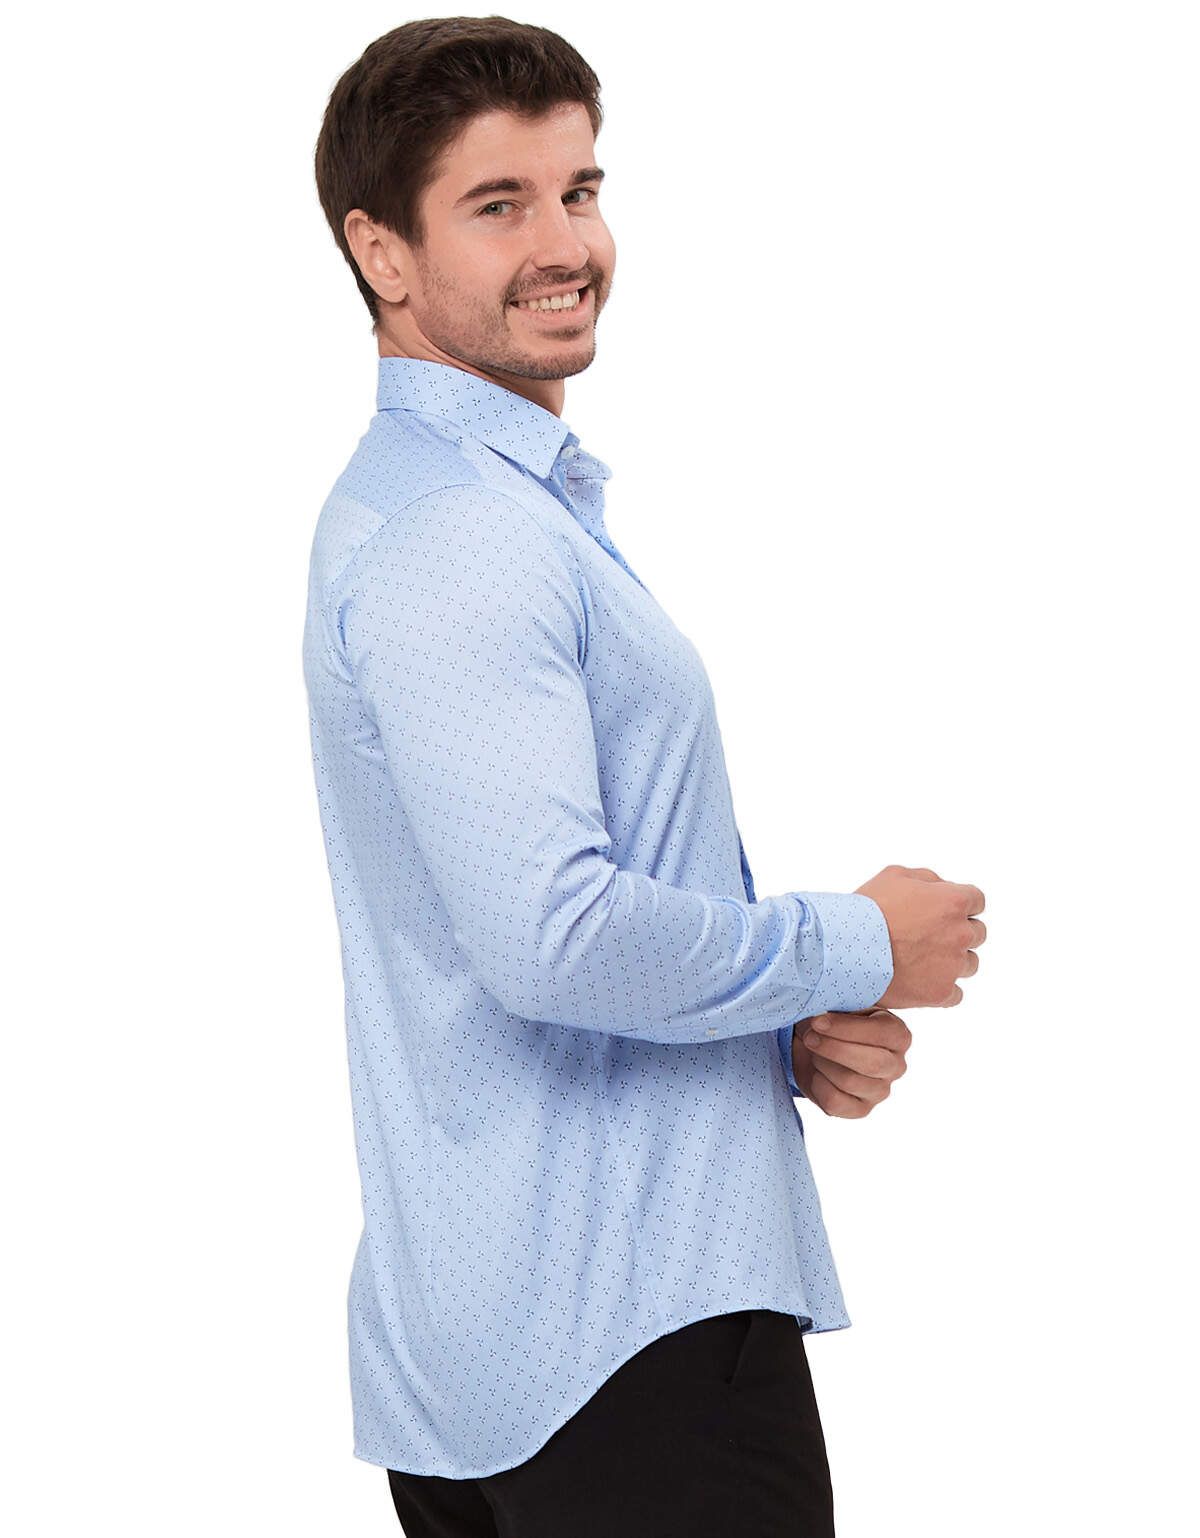 Рубашка мужская PLATIN с рисунком, slim fit